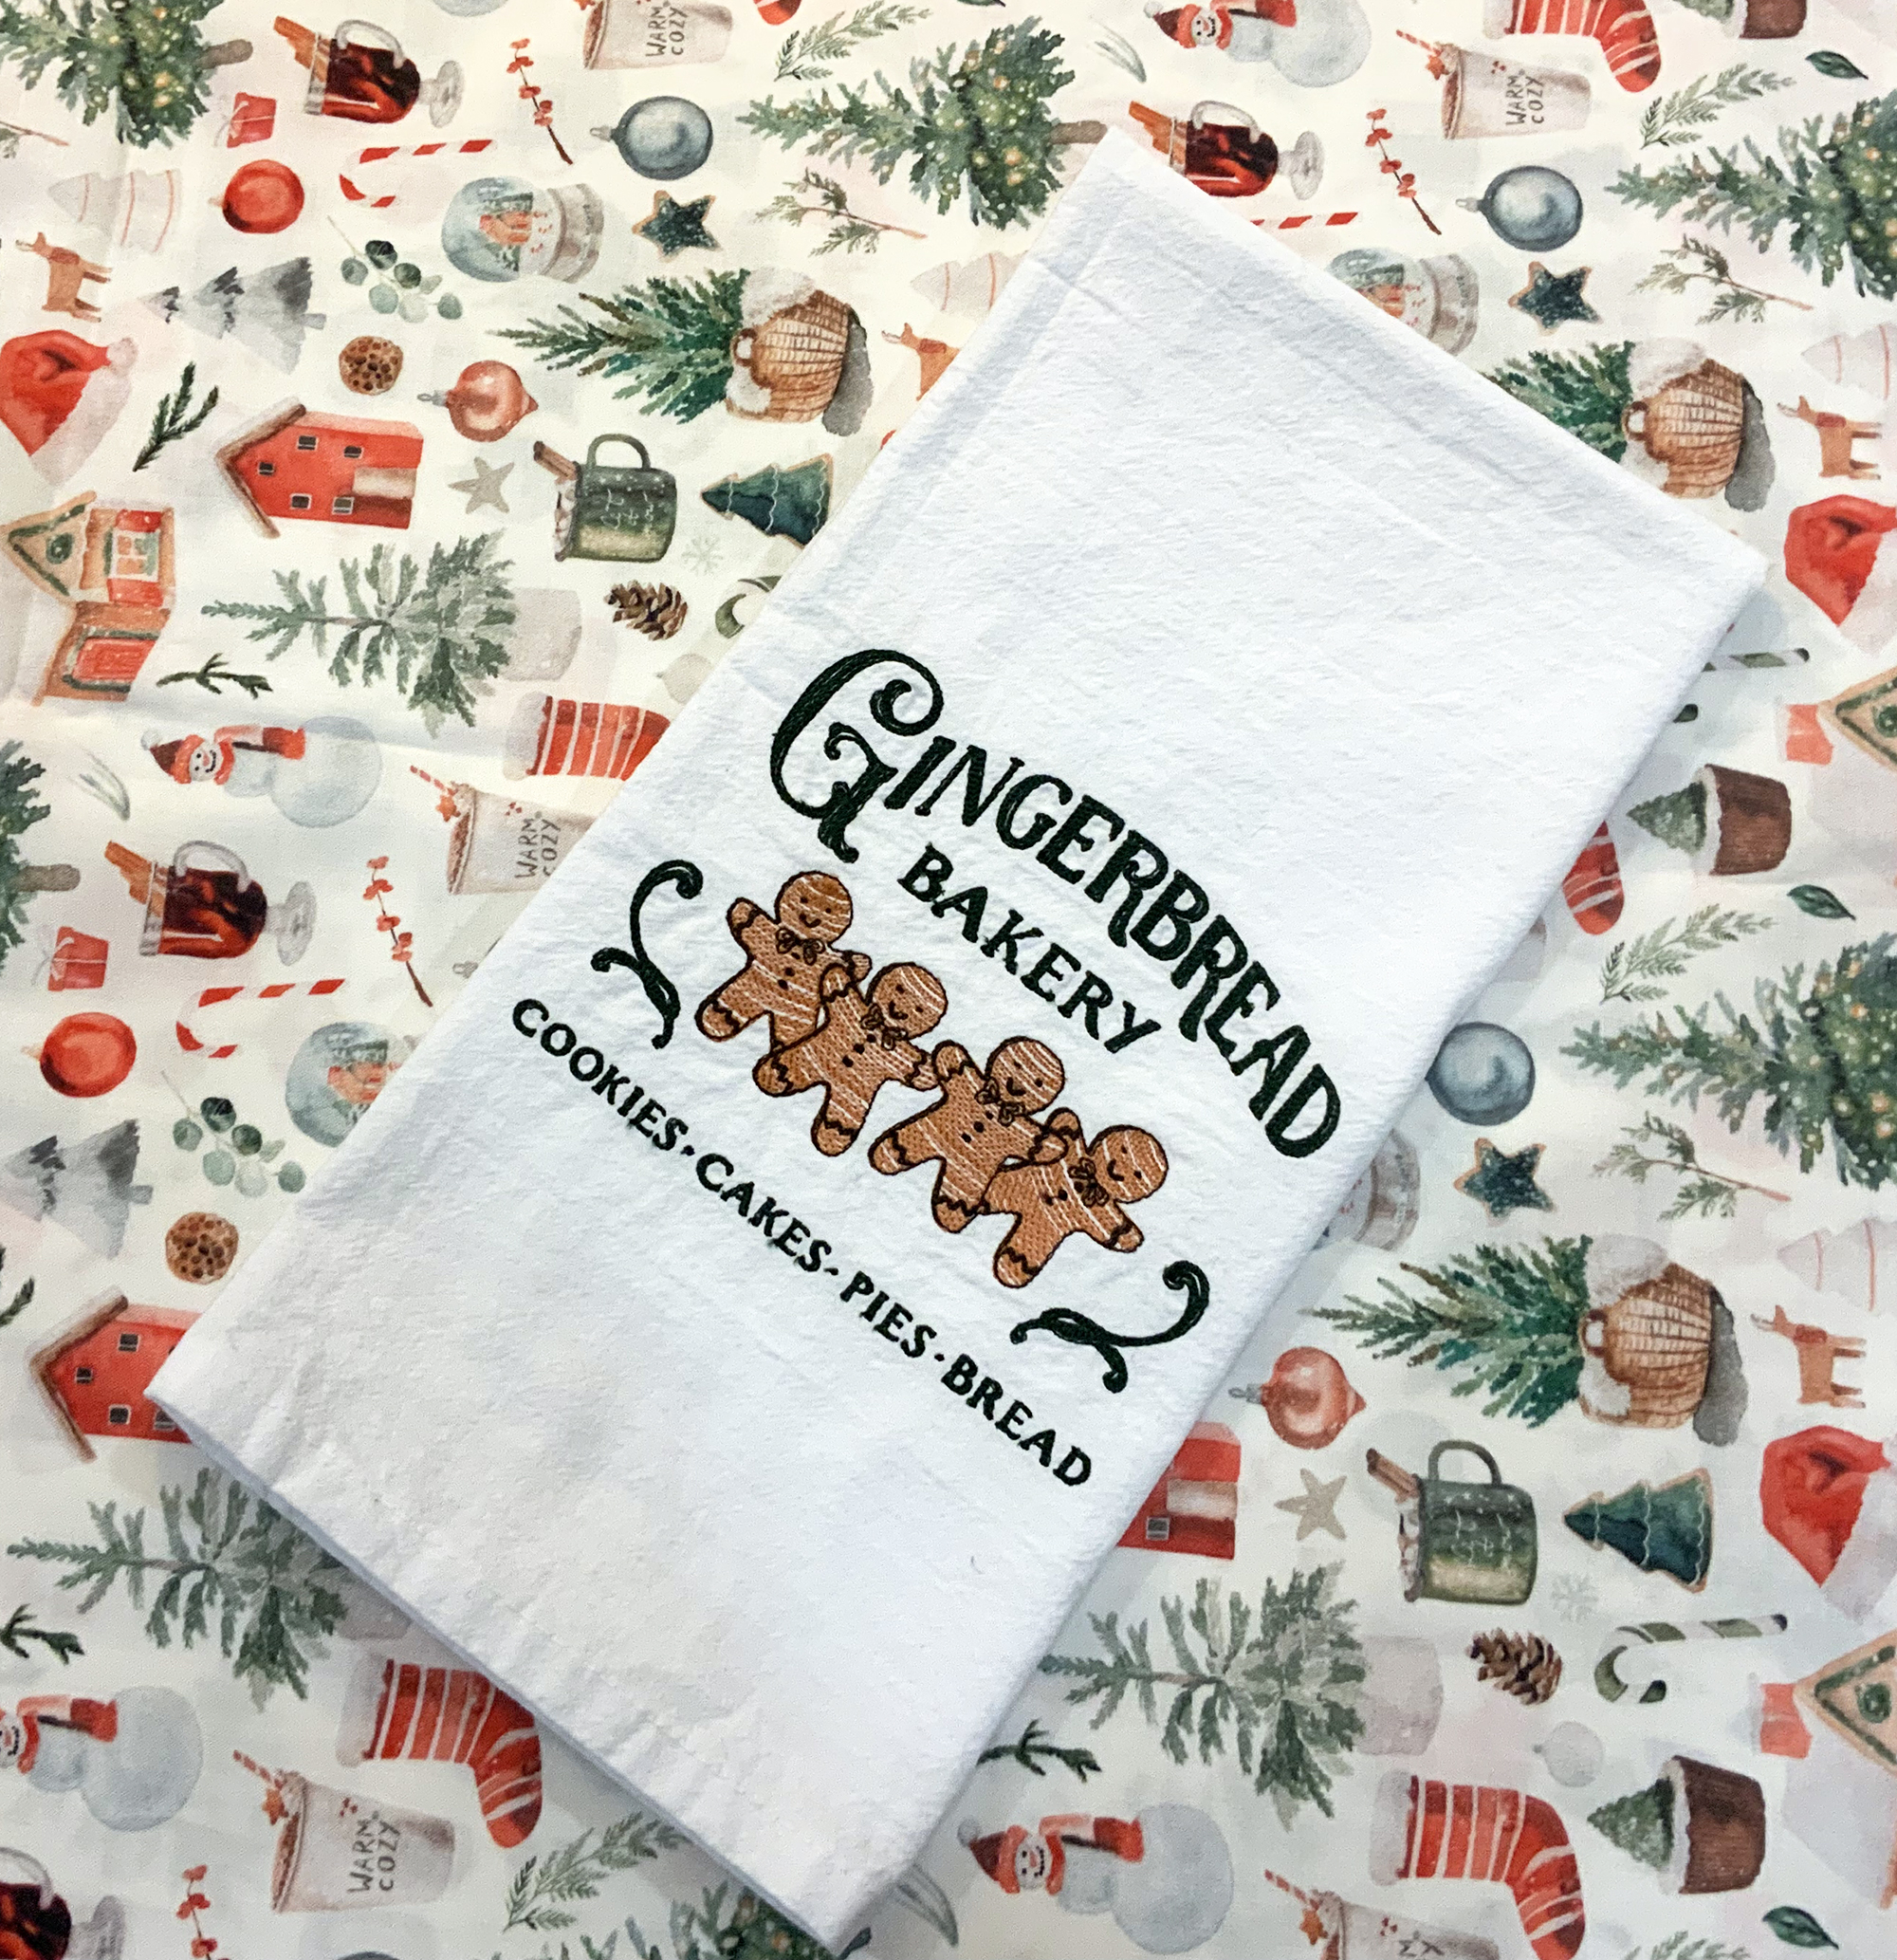 Cozy Homemade DIY Embroidered Bread Bag Towel